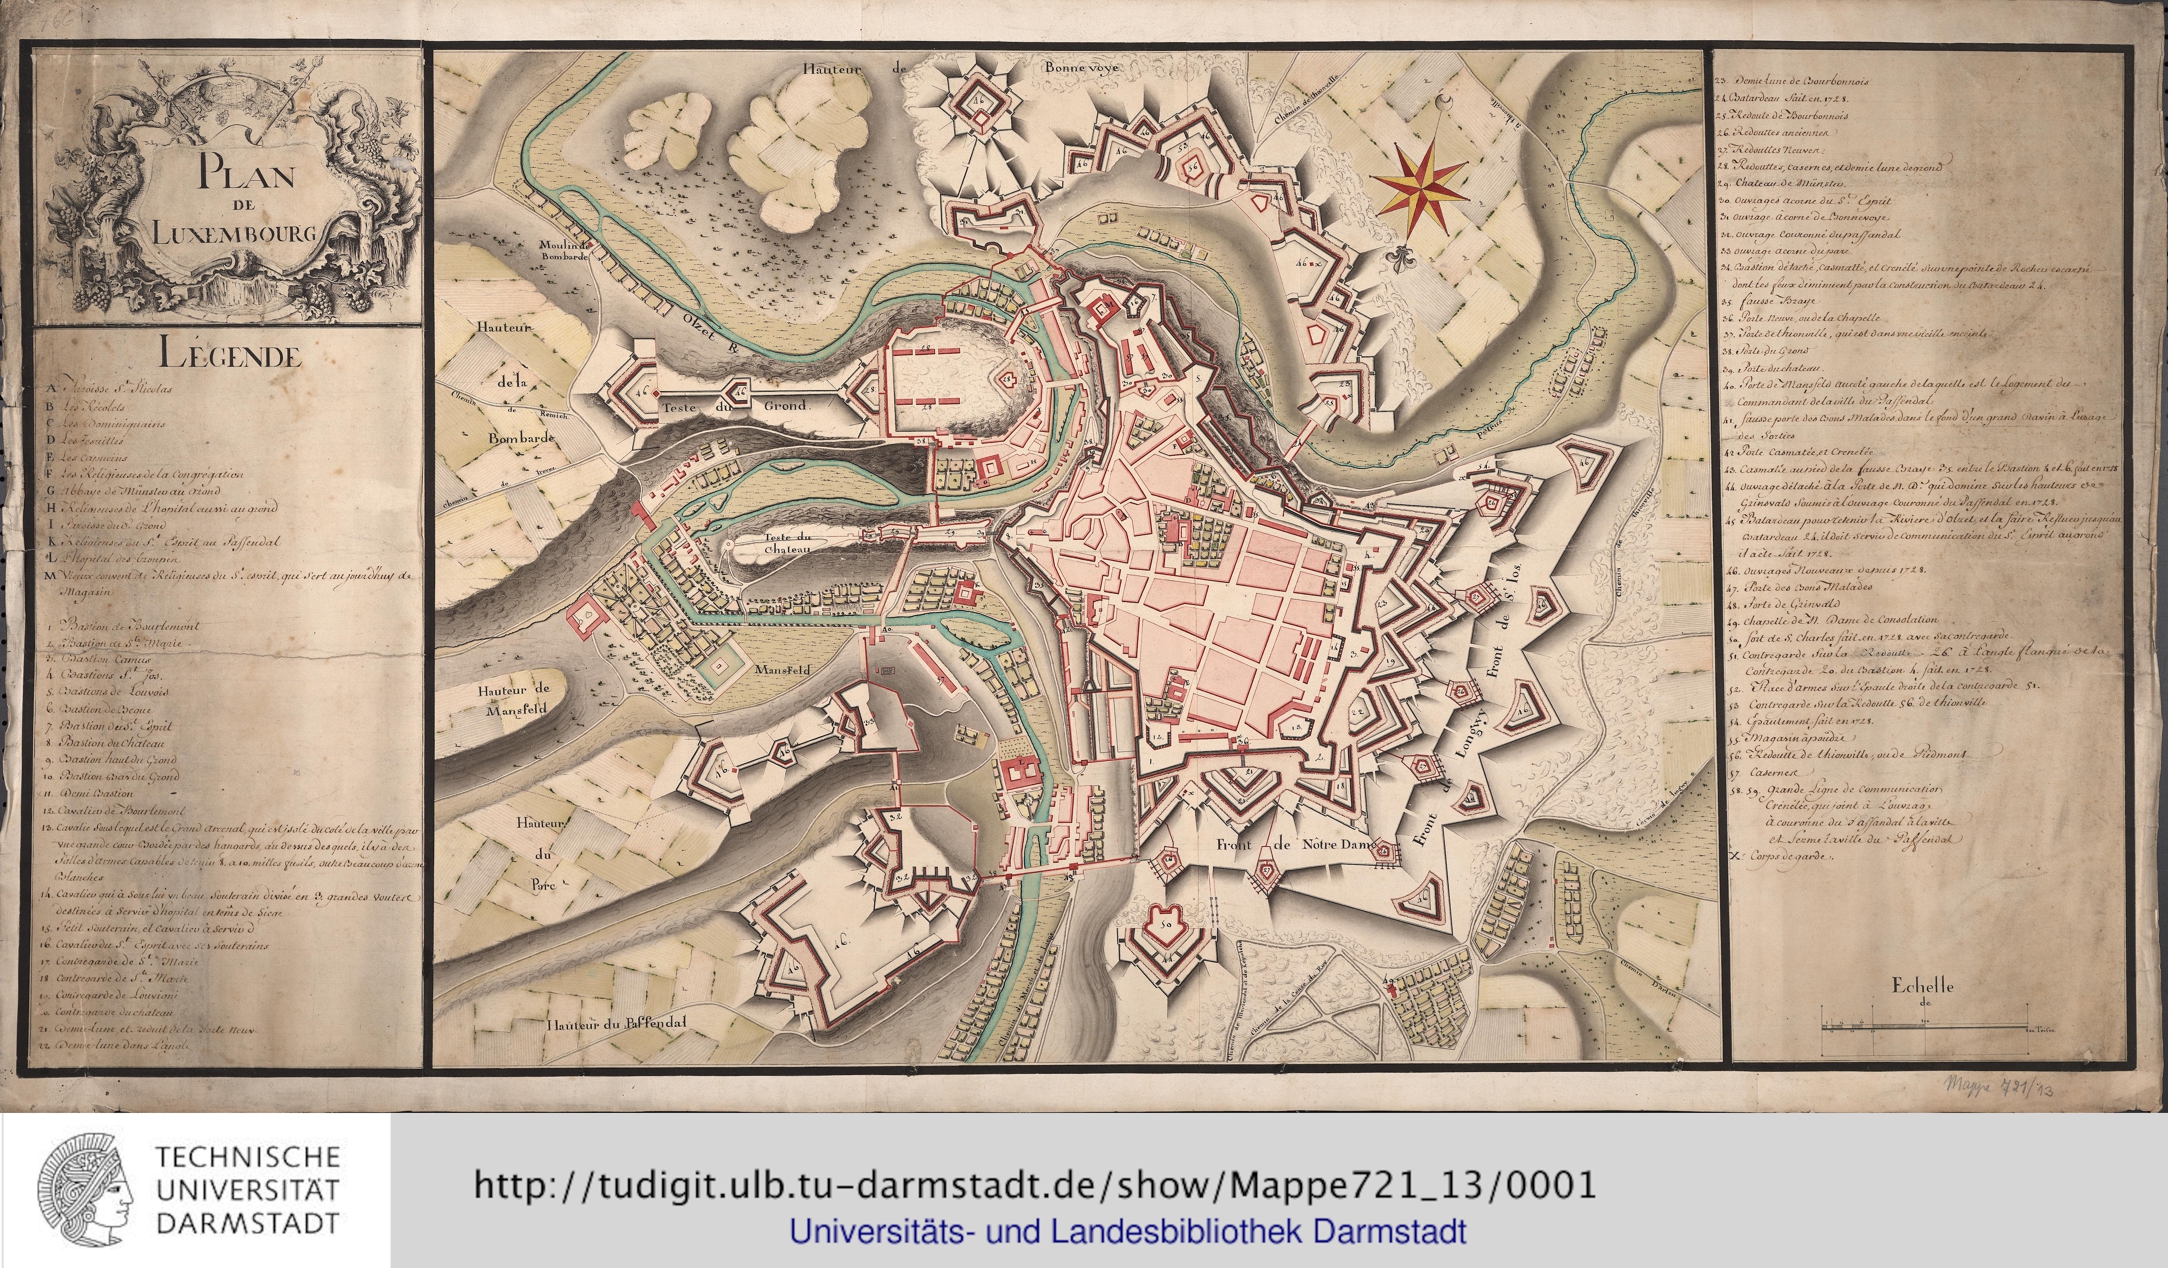 Mappe721_13_0001_luxembourg_1728.jpg